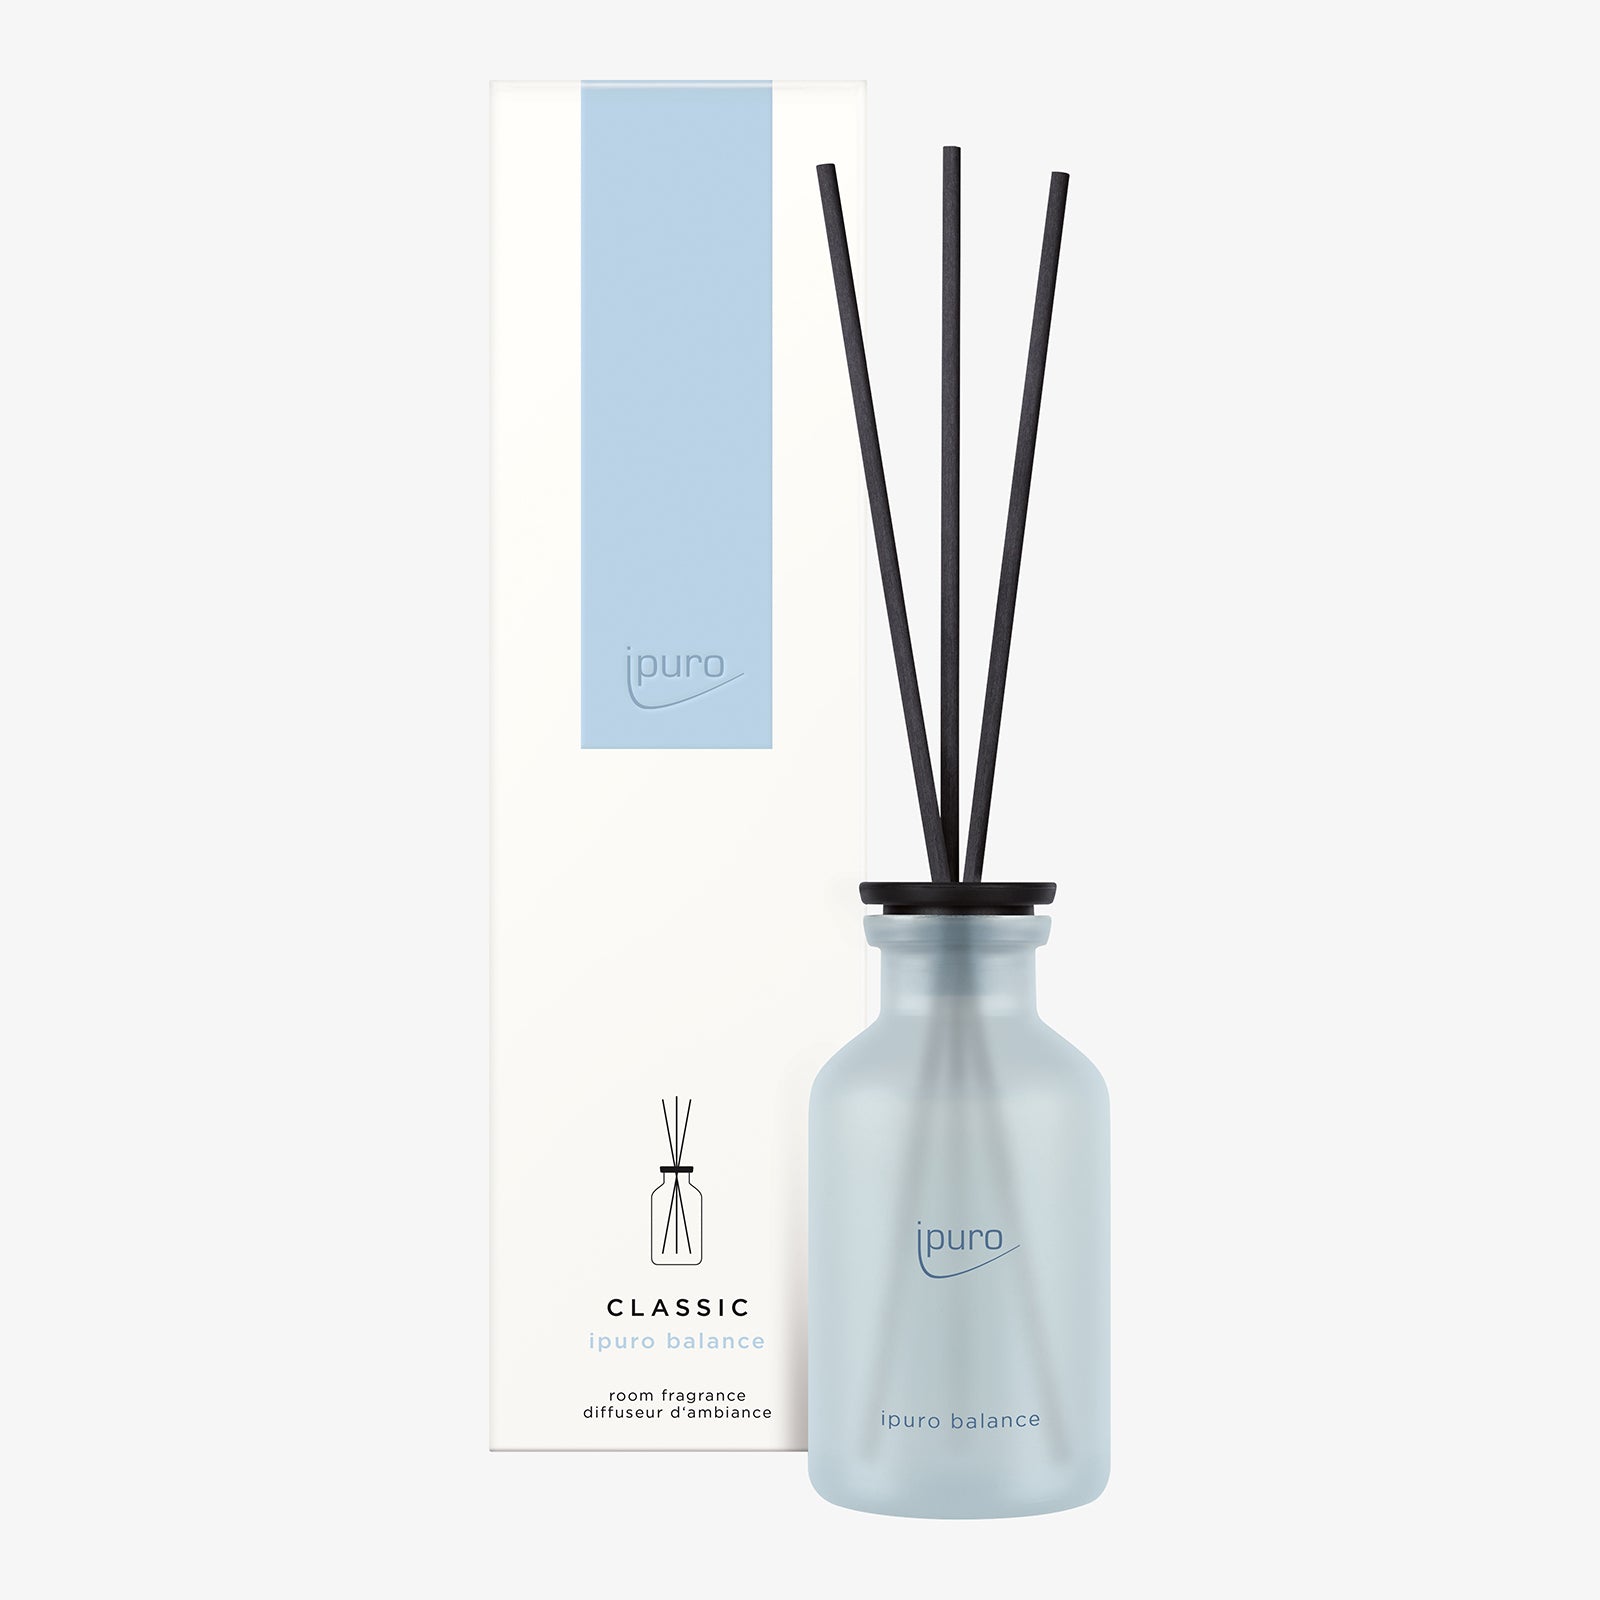 CLASSIC ipuro balance room fragrance – IPURO